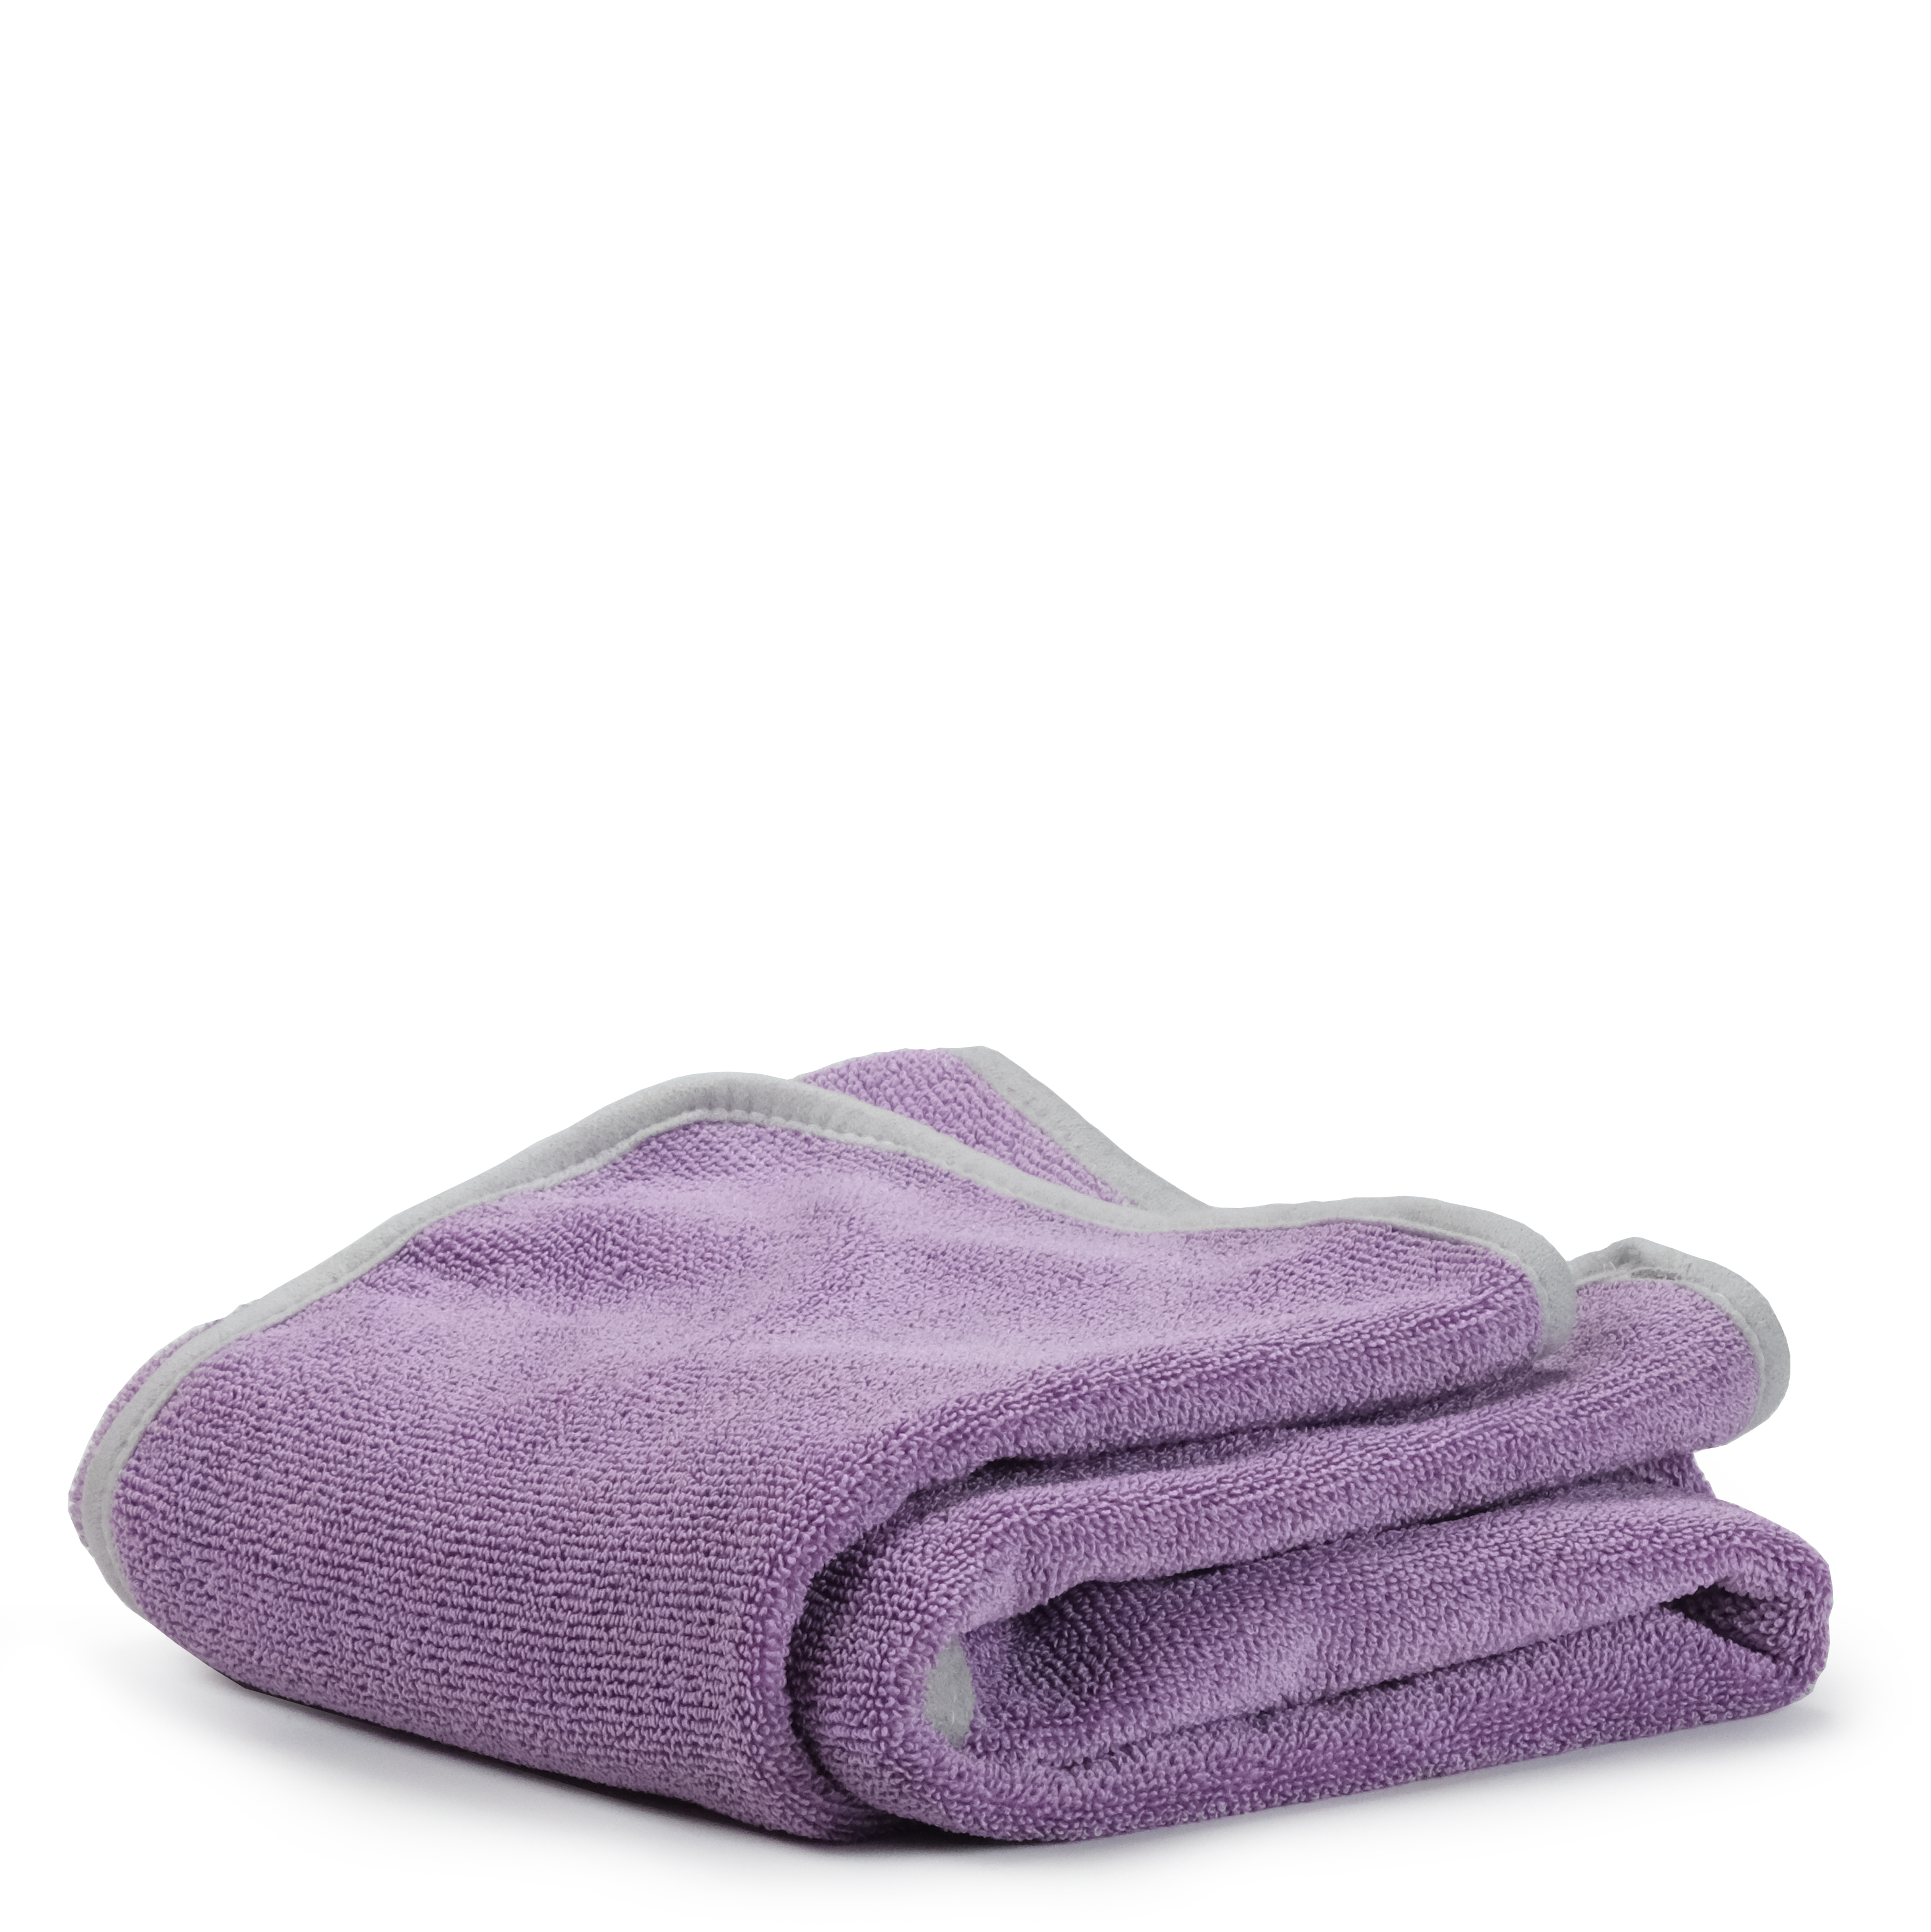 The Rag Company Drying Towel: Twist N' Shout - Chem-X